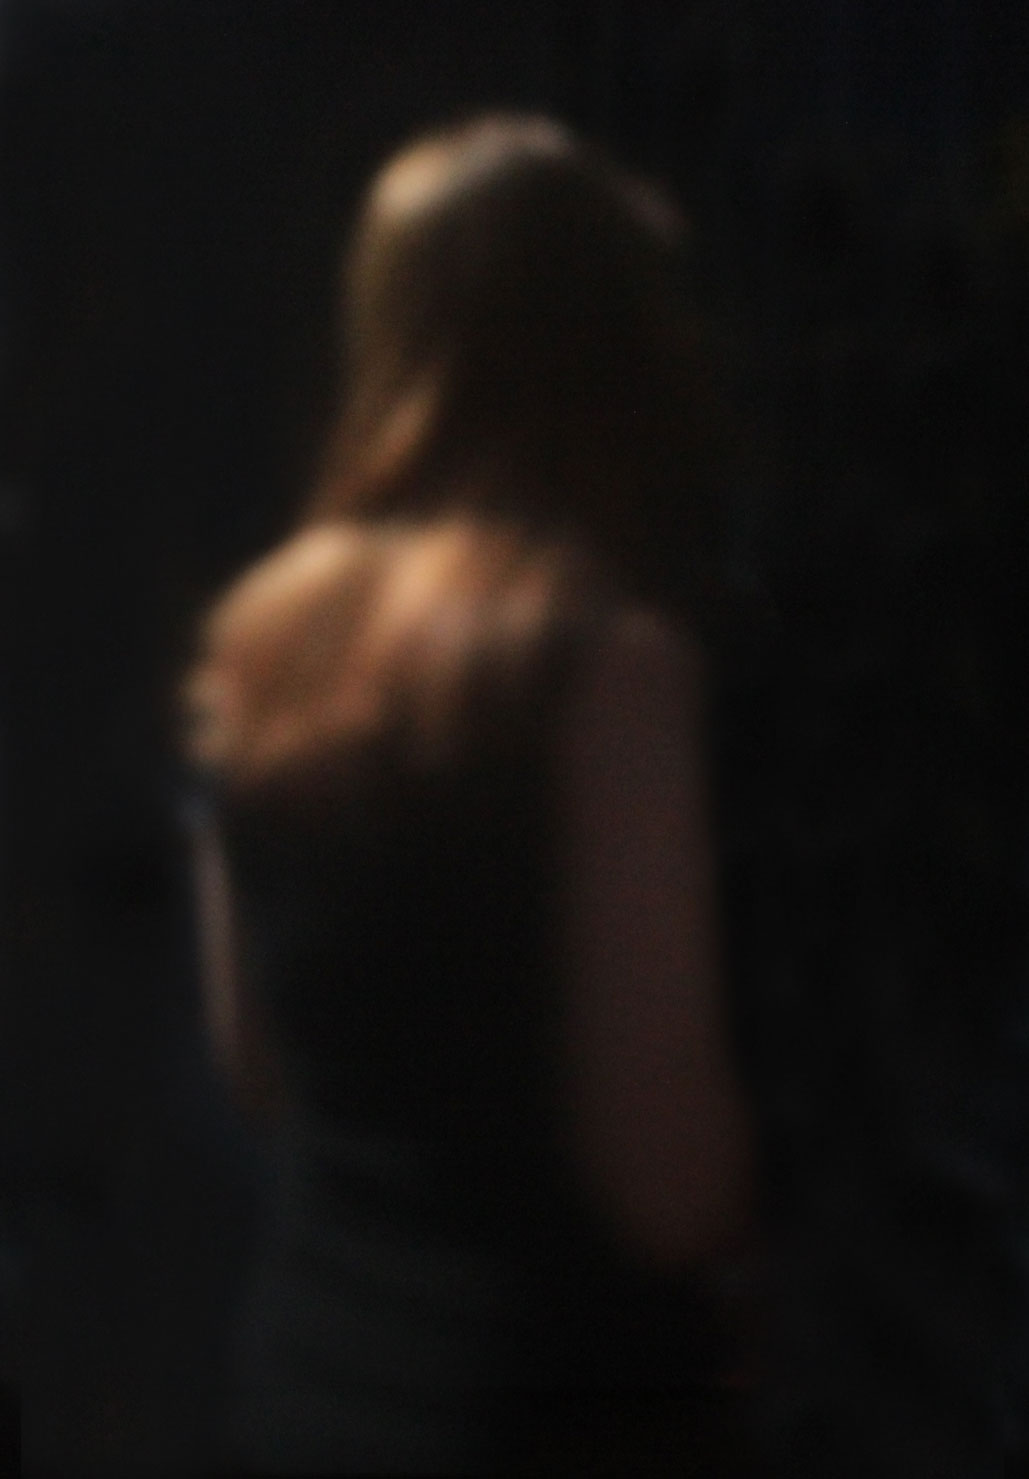 21 „Schulter“, 2012, New York, Camera Obscura, Pigmentdruck auf Alu-Dibond